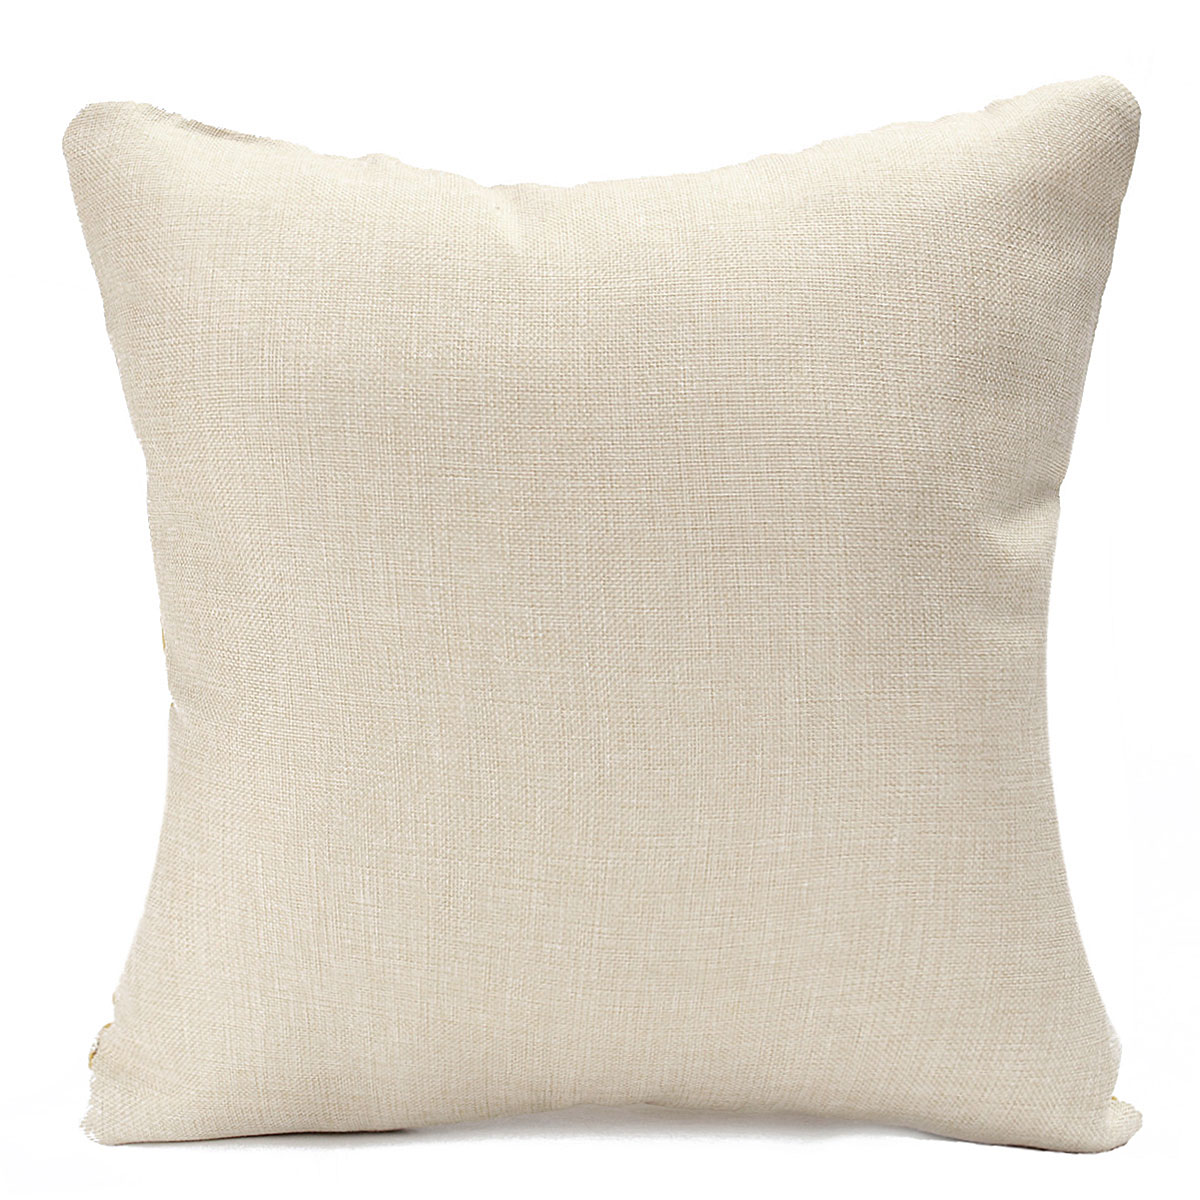 Square-English-Letter-Cotton-Linen-Pillow-Case-Throw-Cushion-Cover-Home-Decor-1053093-8